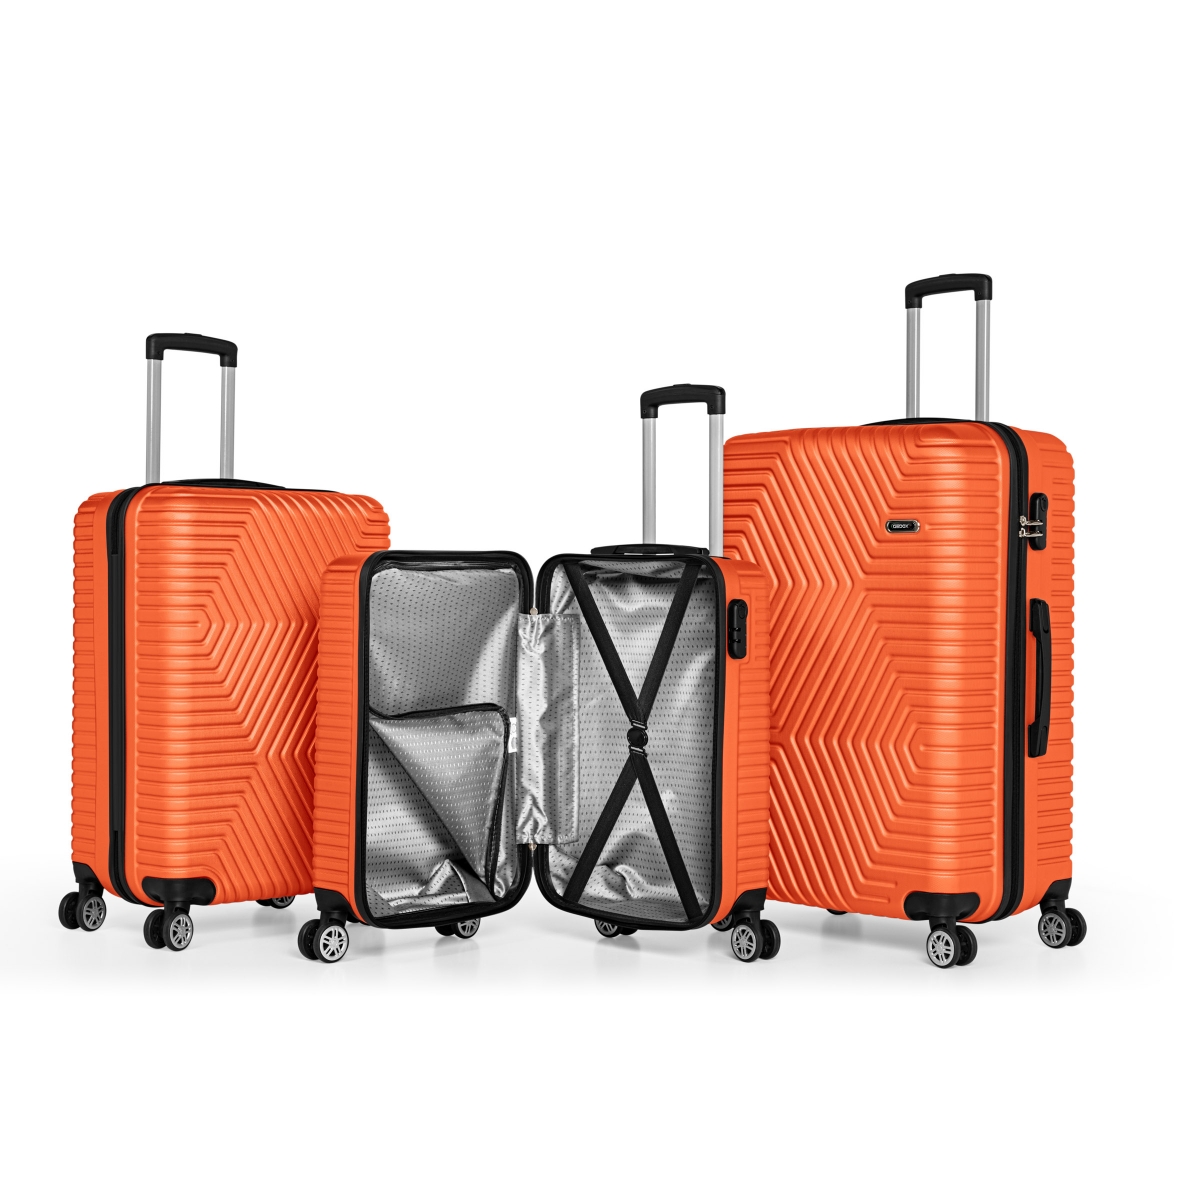 G&D Polo Suitcase ABS 3'lü Lüx Valiz Seyahat Seti - Model:600.15 Turuncu